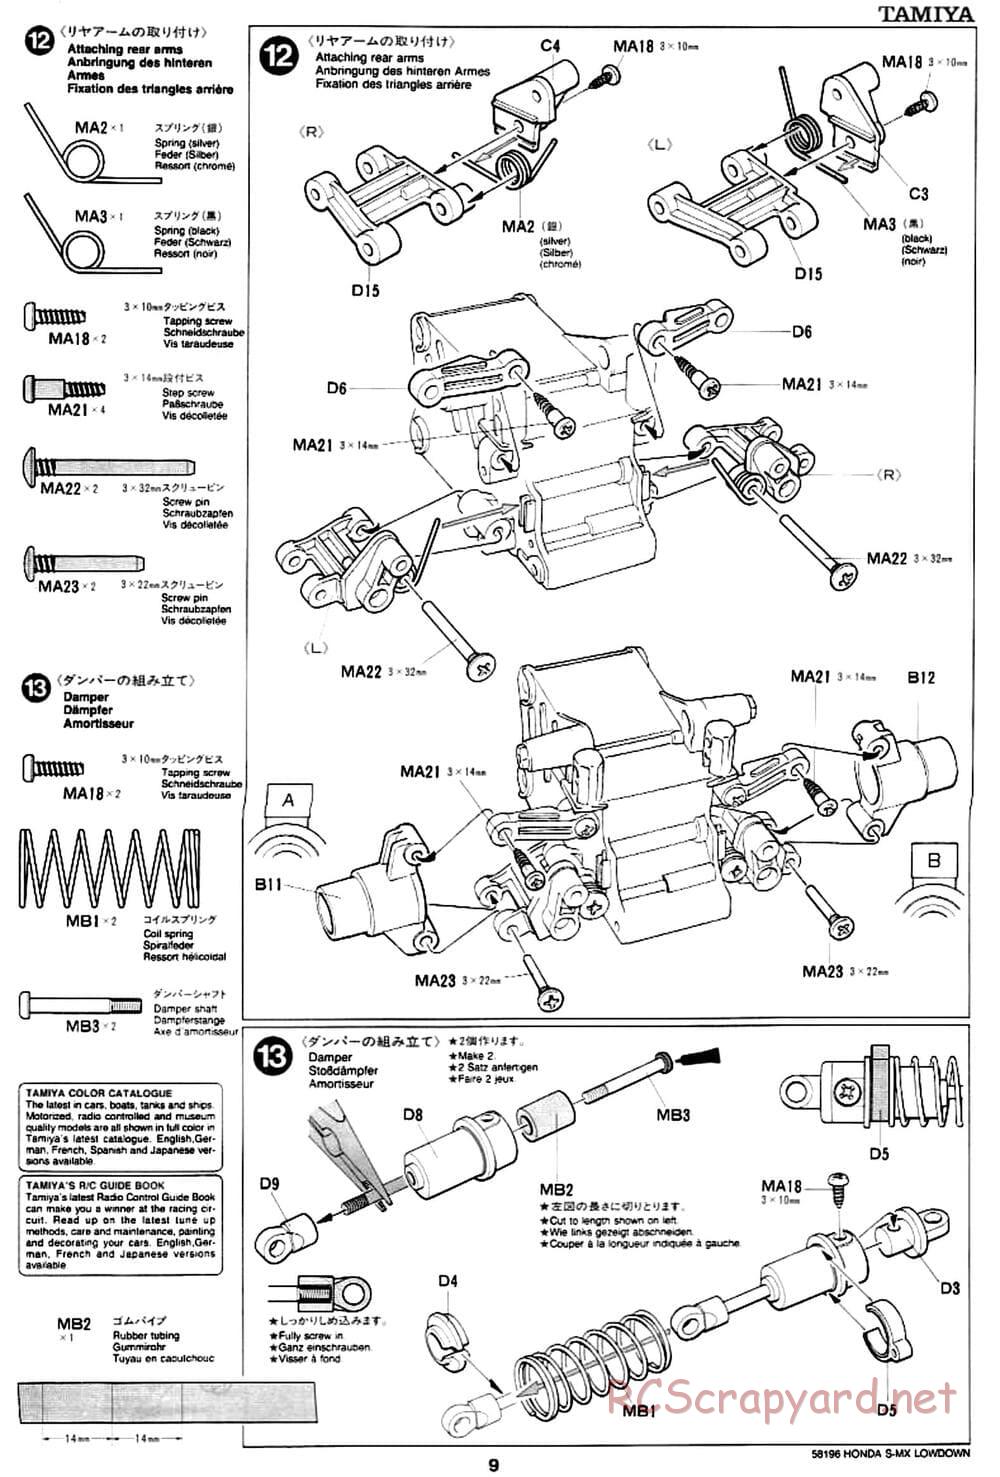 Tamiya - Honda S-MX Lowdown - M01 Chassis - Manual - Page 9